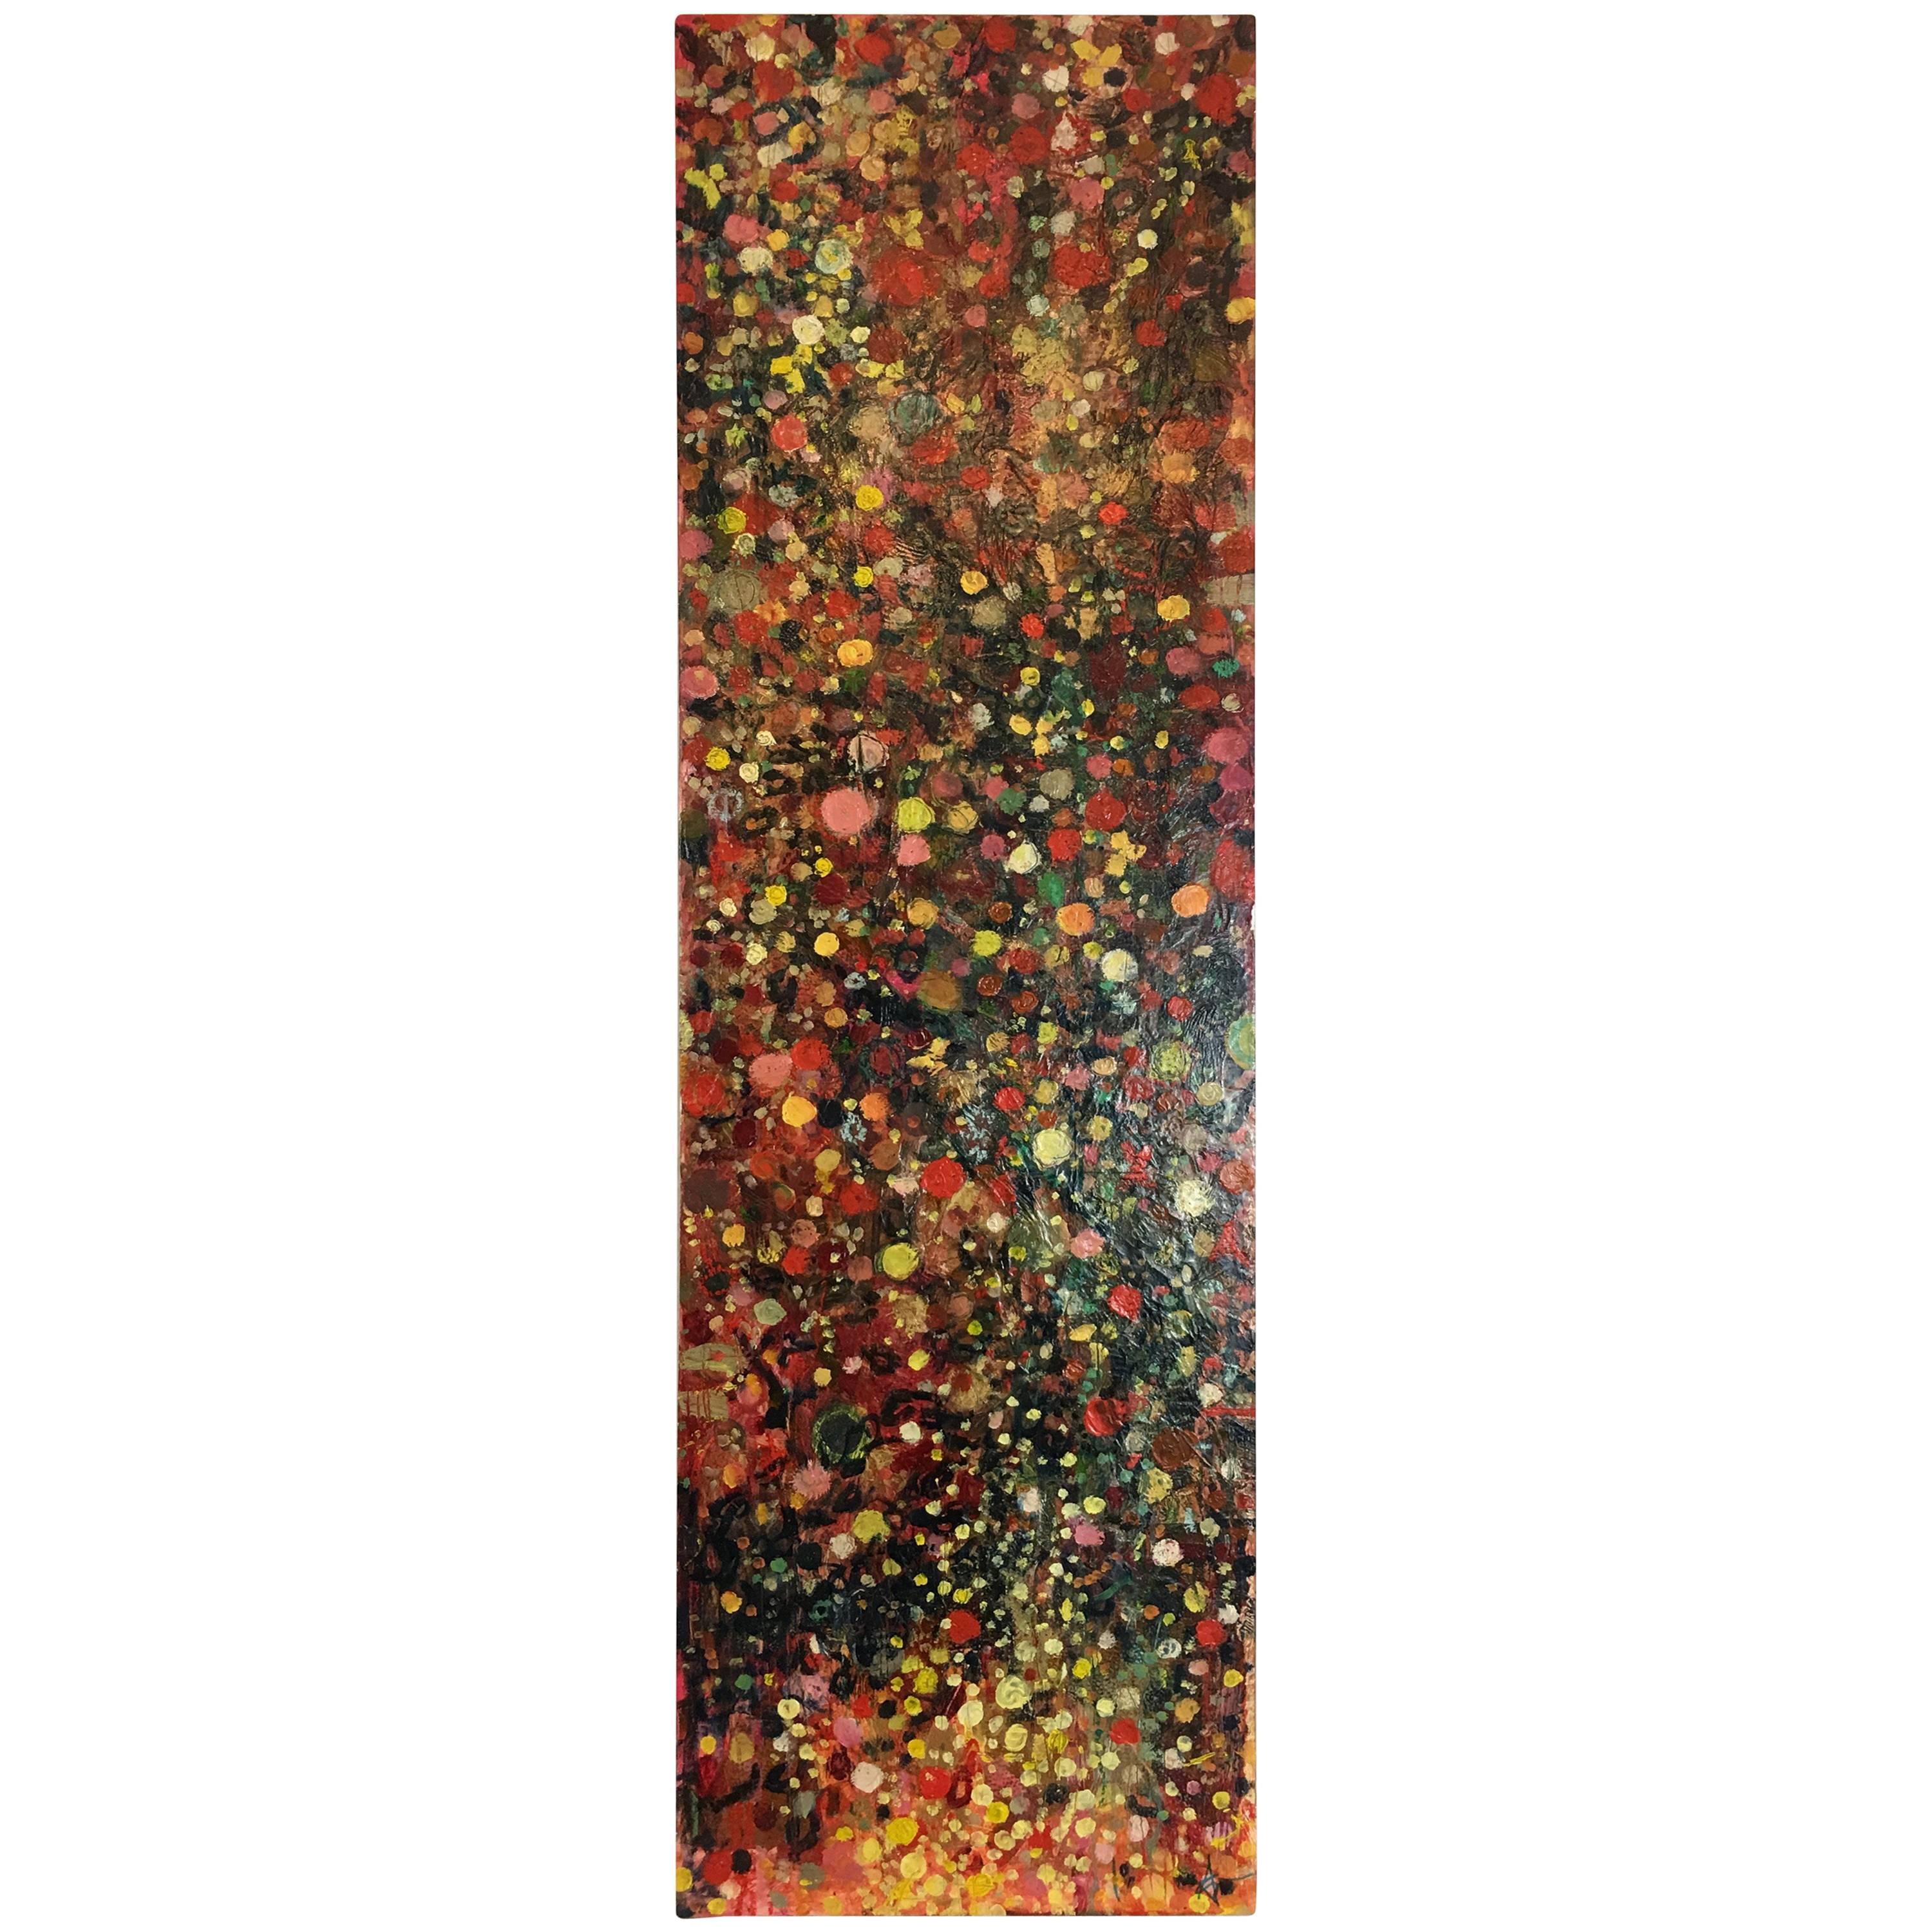 Amy Spassov "Superfluous Fireworks" 2008, Oil on Board